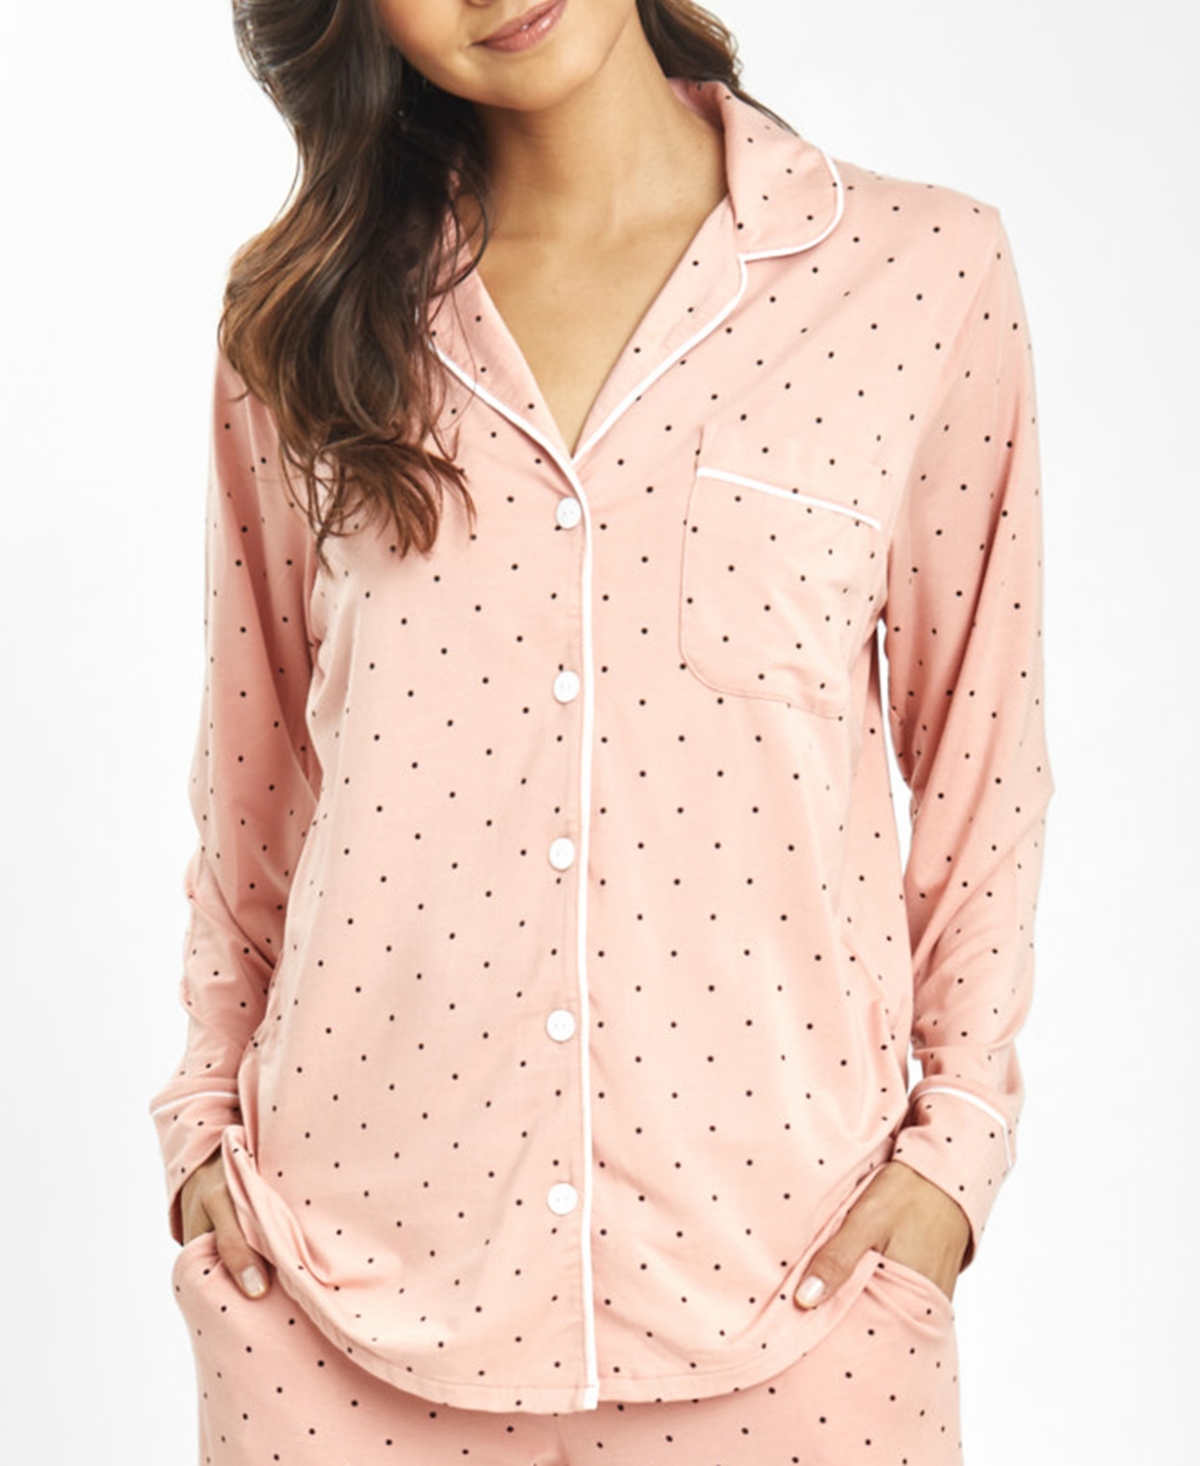 Women's The All-Day Lounge Print Shirt - Pepper Dot, Shell Pink